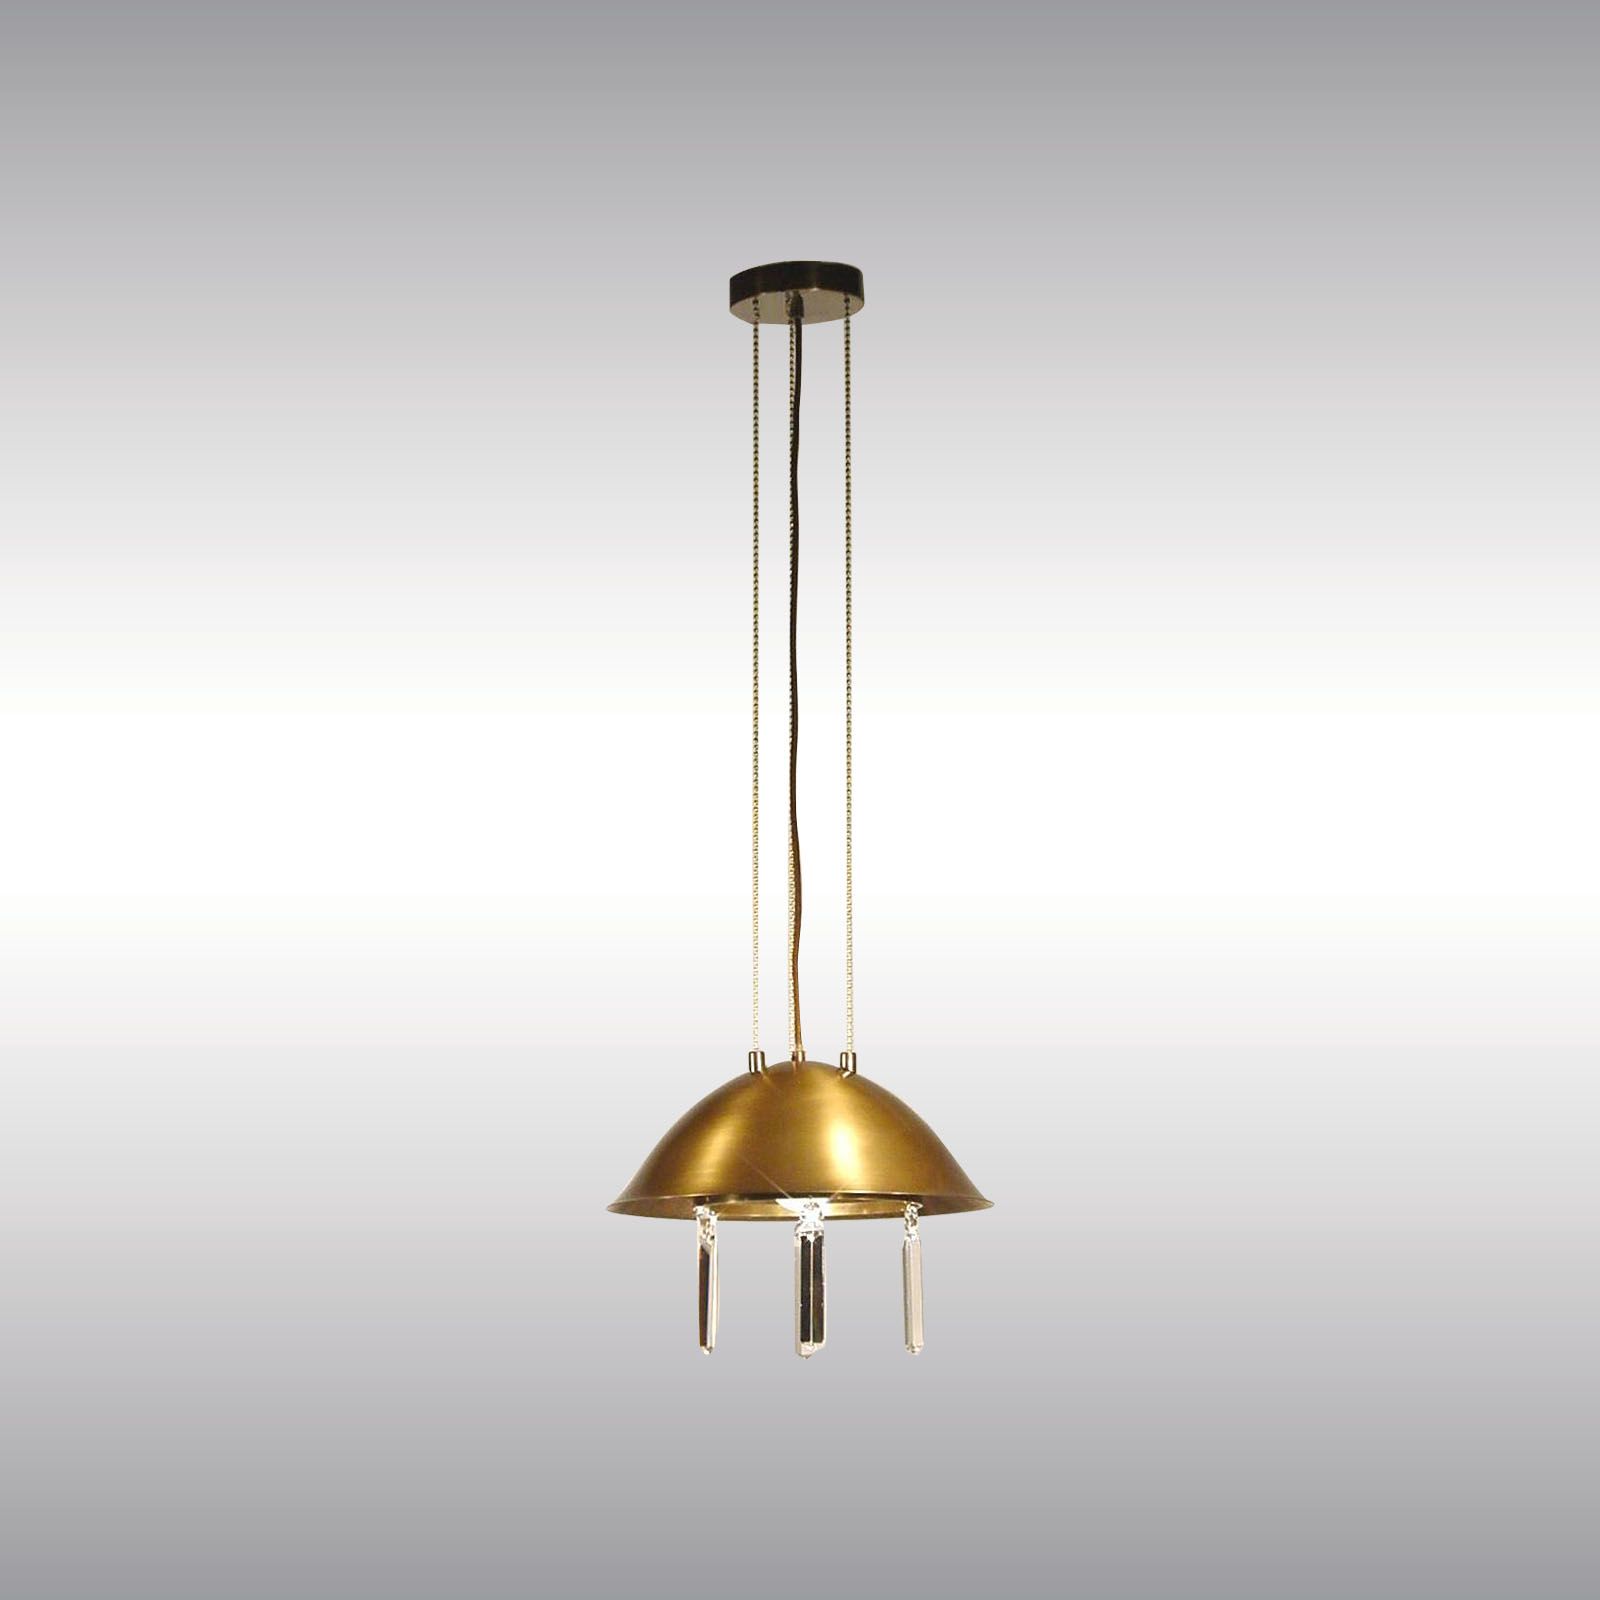 WOKA LAMPS VIENNA - OrderNr.: 20305|Dining 1 - Design: Josef Hoffmann